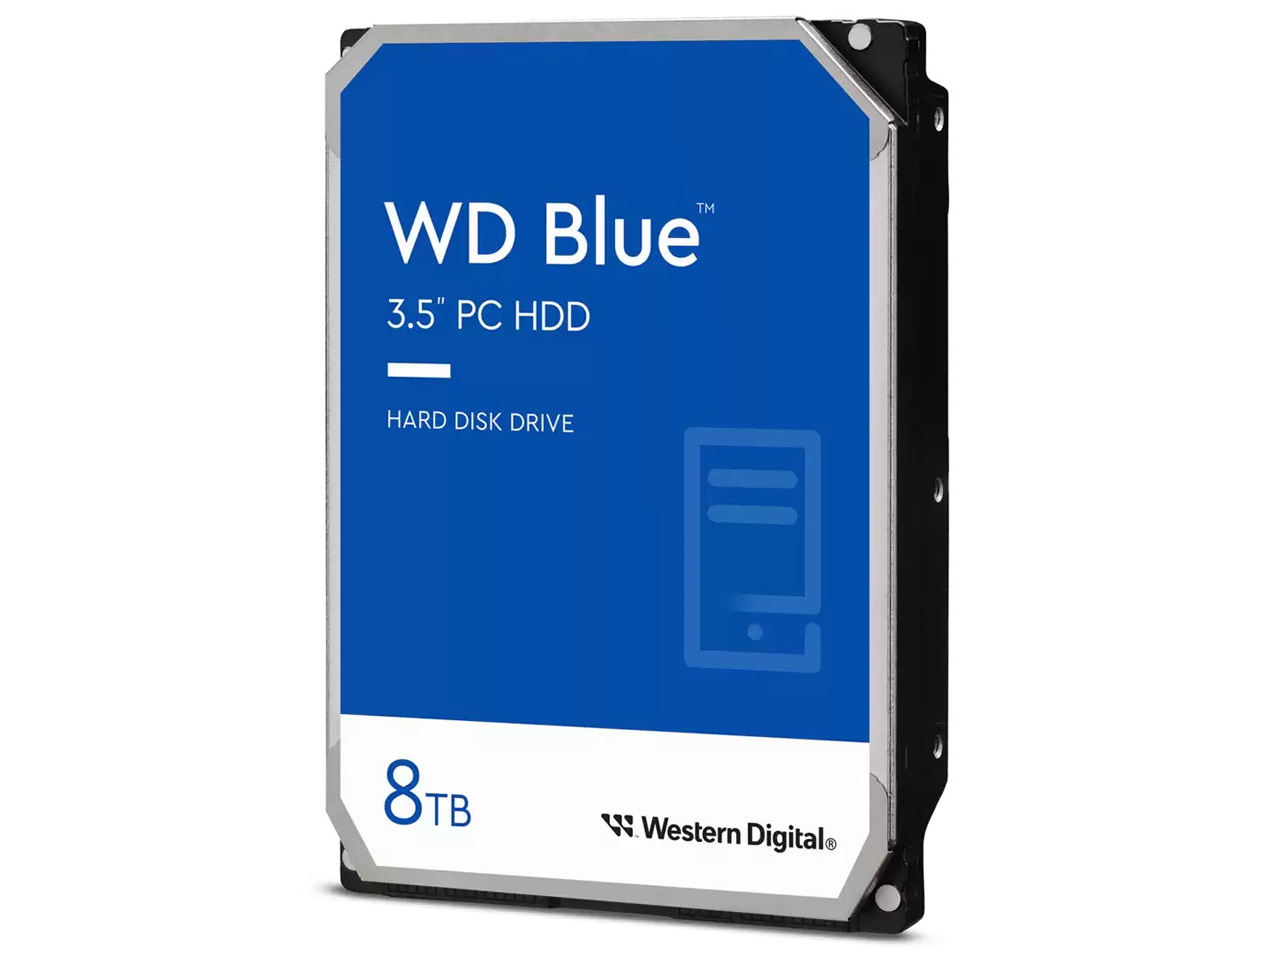 Western Digital ウエスタンデジタル WD80EAAZ [ WD Blue 内蔵 HDD ハードディスク 8TB CMR 3.5インチ SATA 5640rpm キャッシュ256MB PC向け メーカー保証2年 ]